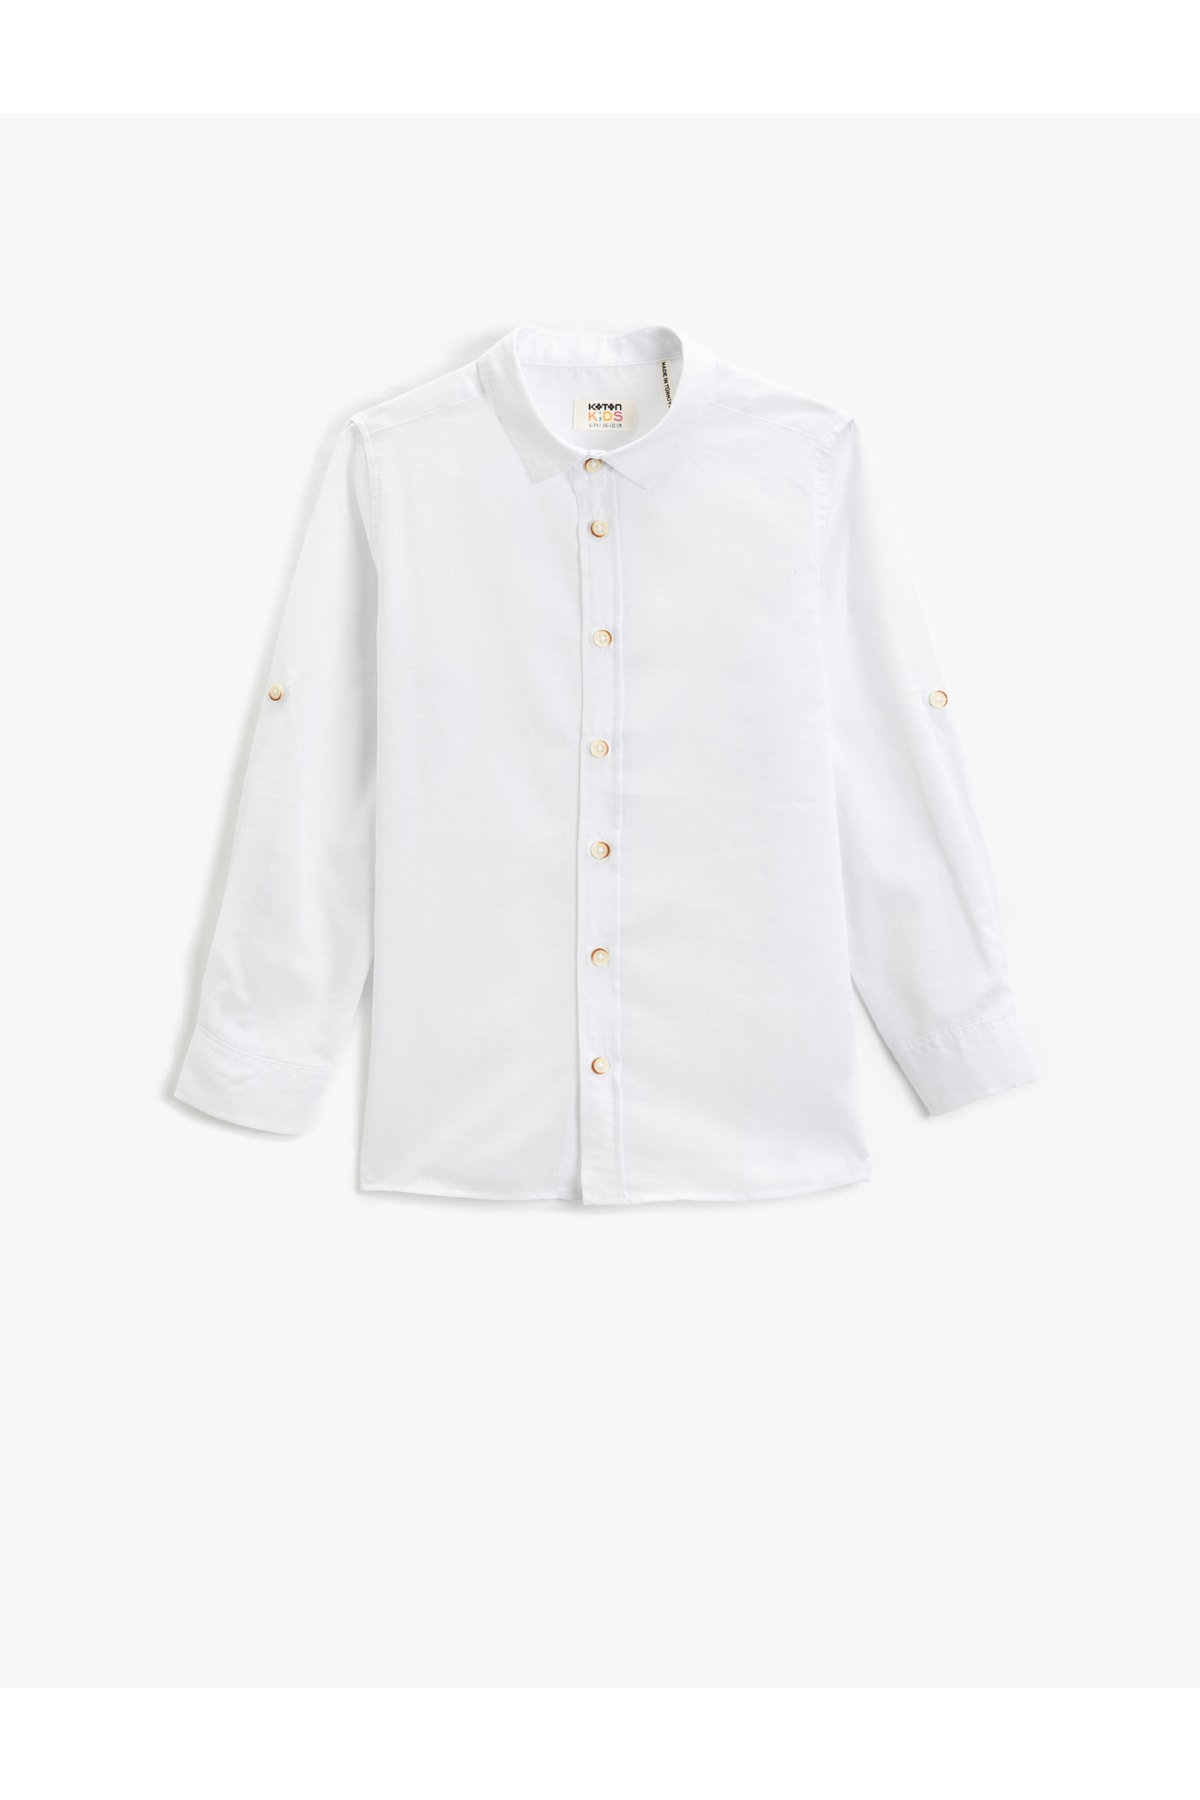 Koton Poplin Basic Shirt Long Sleeved With Buttons